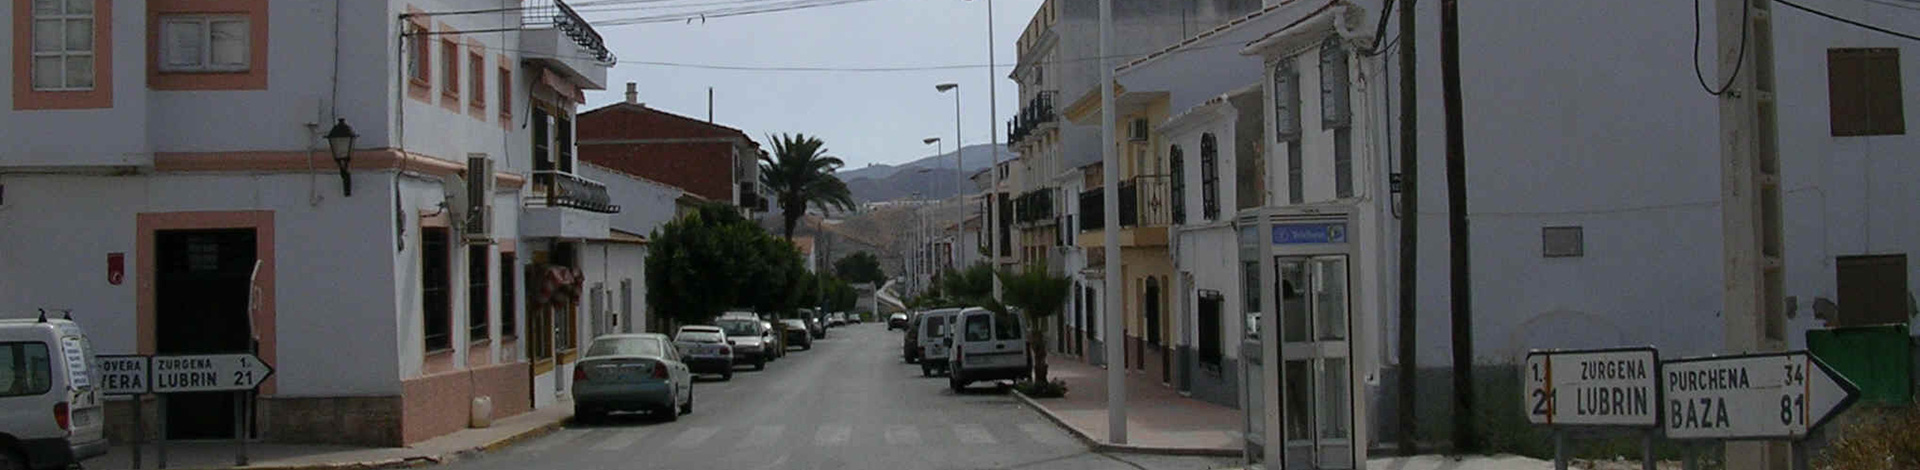 Your New Home in Almería